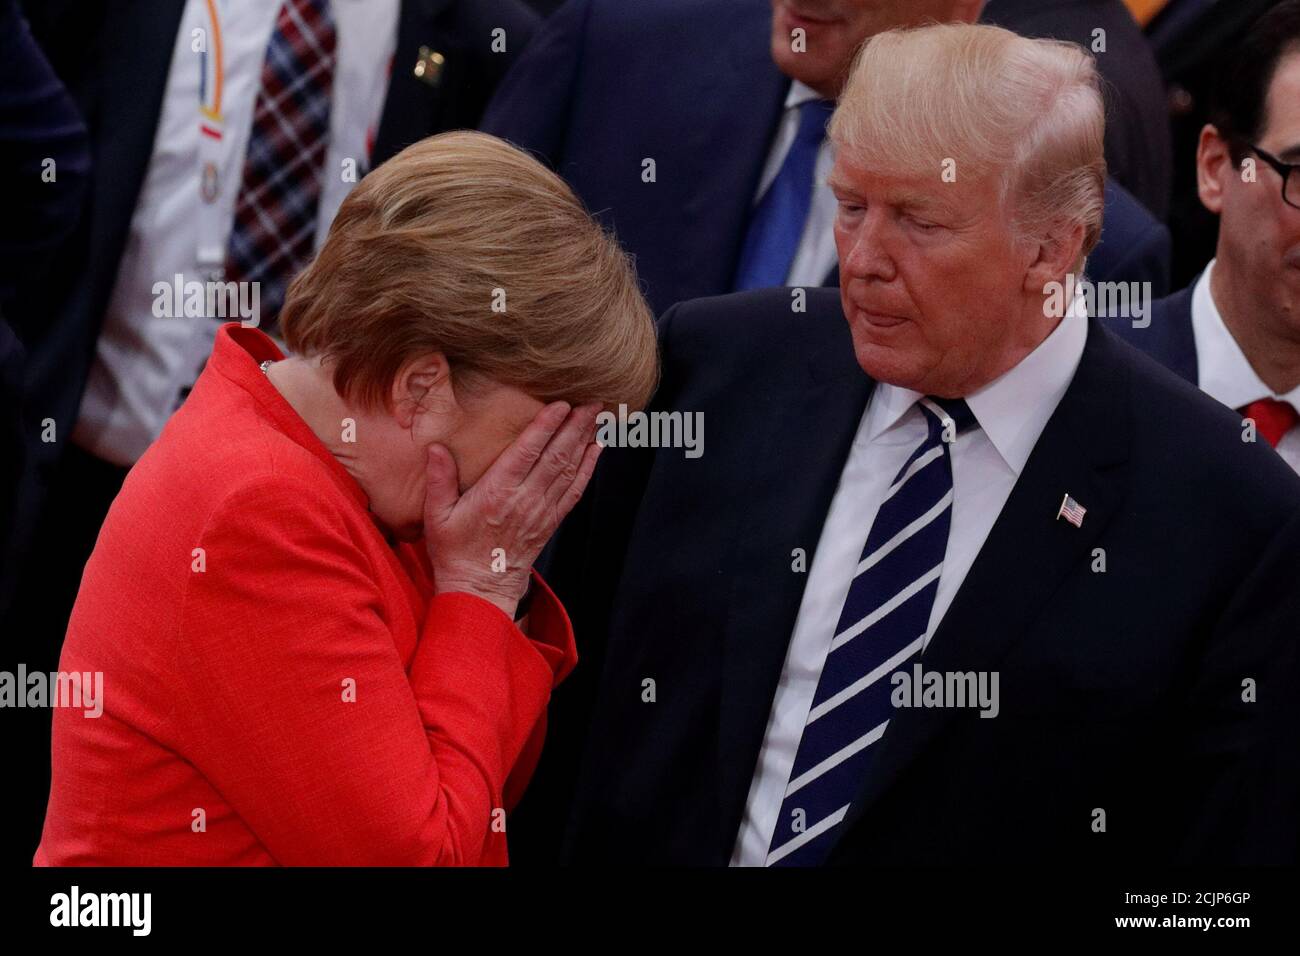 German Chancellor Angela Merkel reacts next to U.S. President Donald Trump during the G20 leaders summit in Hamburg, Germany July 7, 2017. REUTERS/Philippe Wojazer Stock Photo